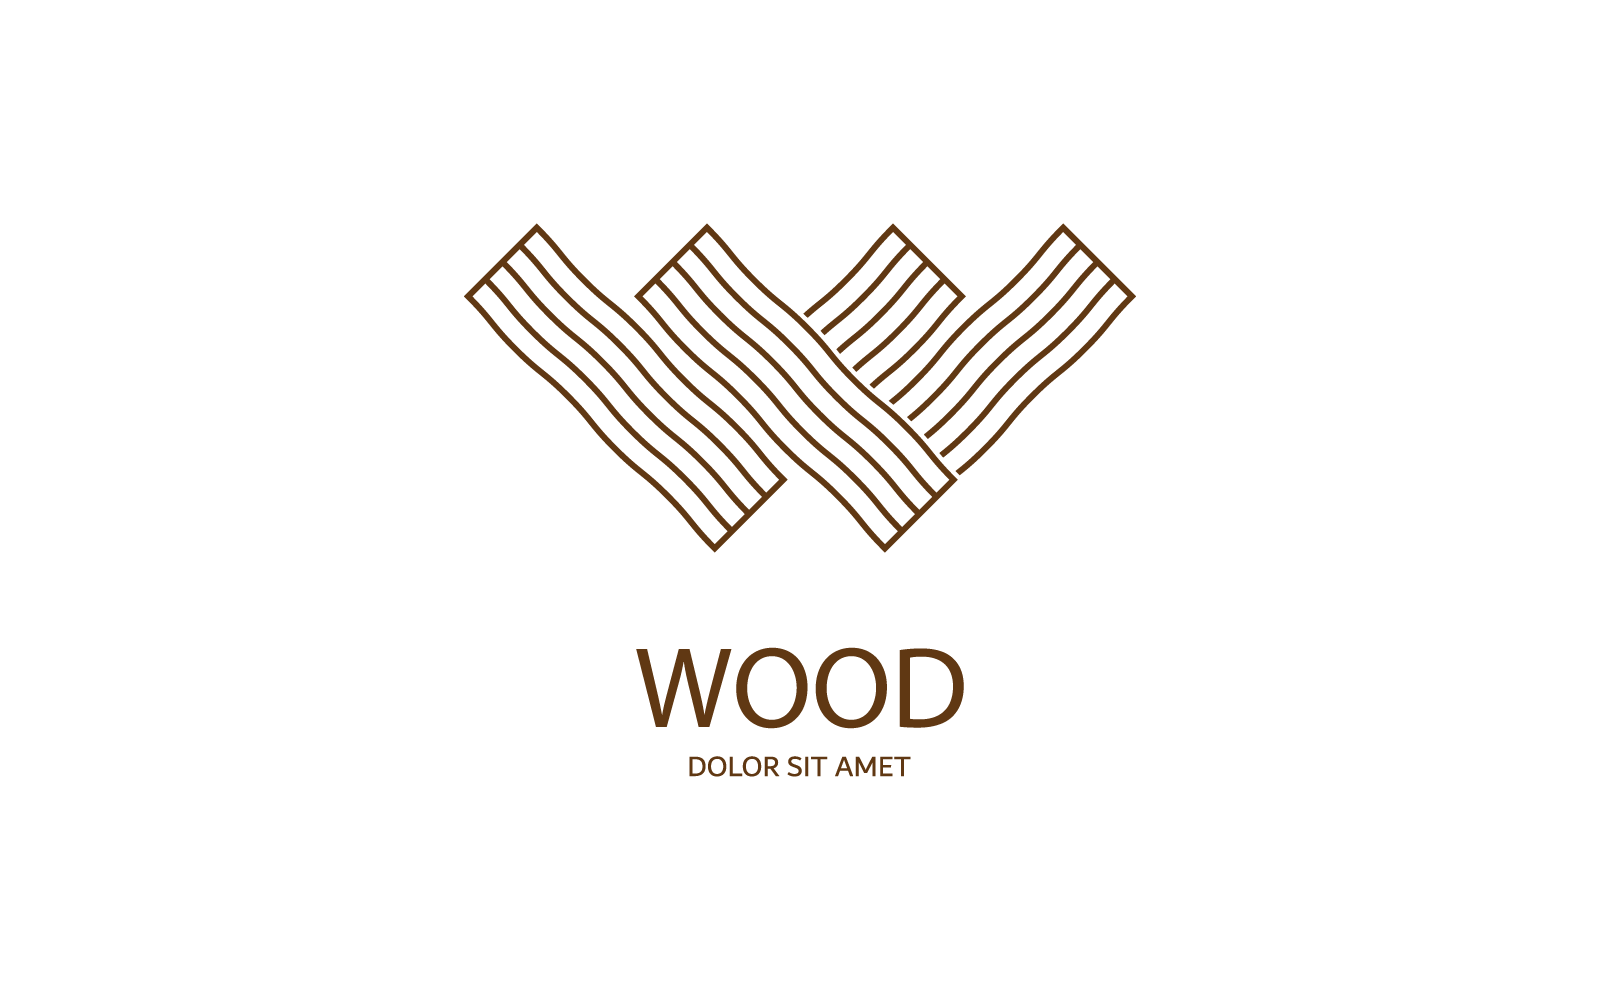 Wood logo icon vector flat design